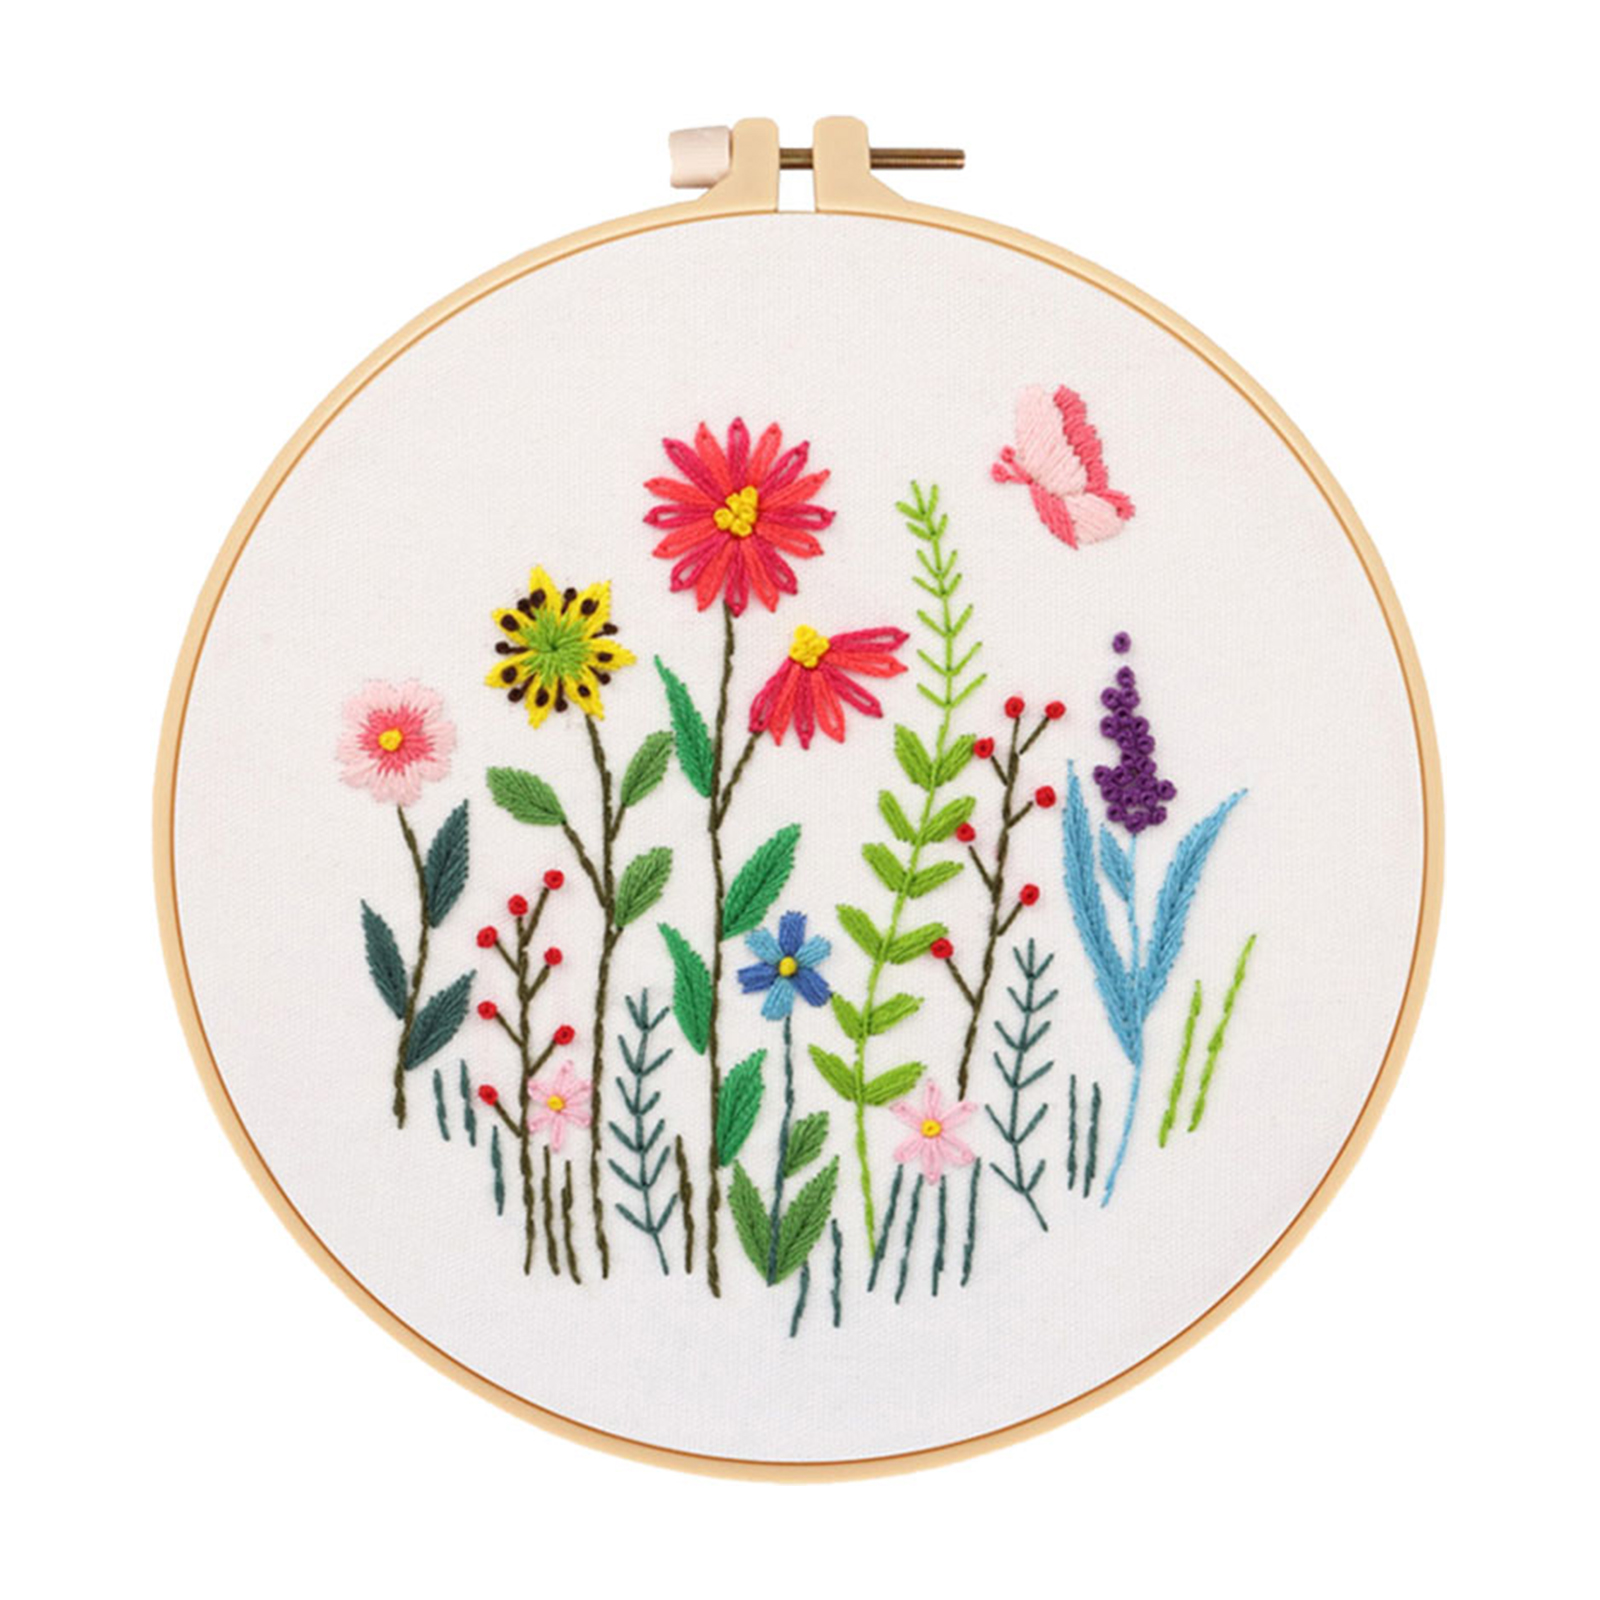 DIY Handmade Embroidery Cross stitch kit - Blooming Flower Pattern